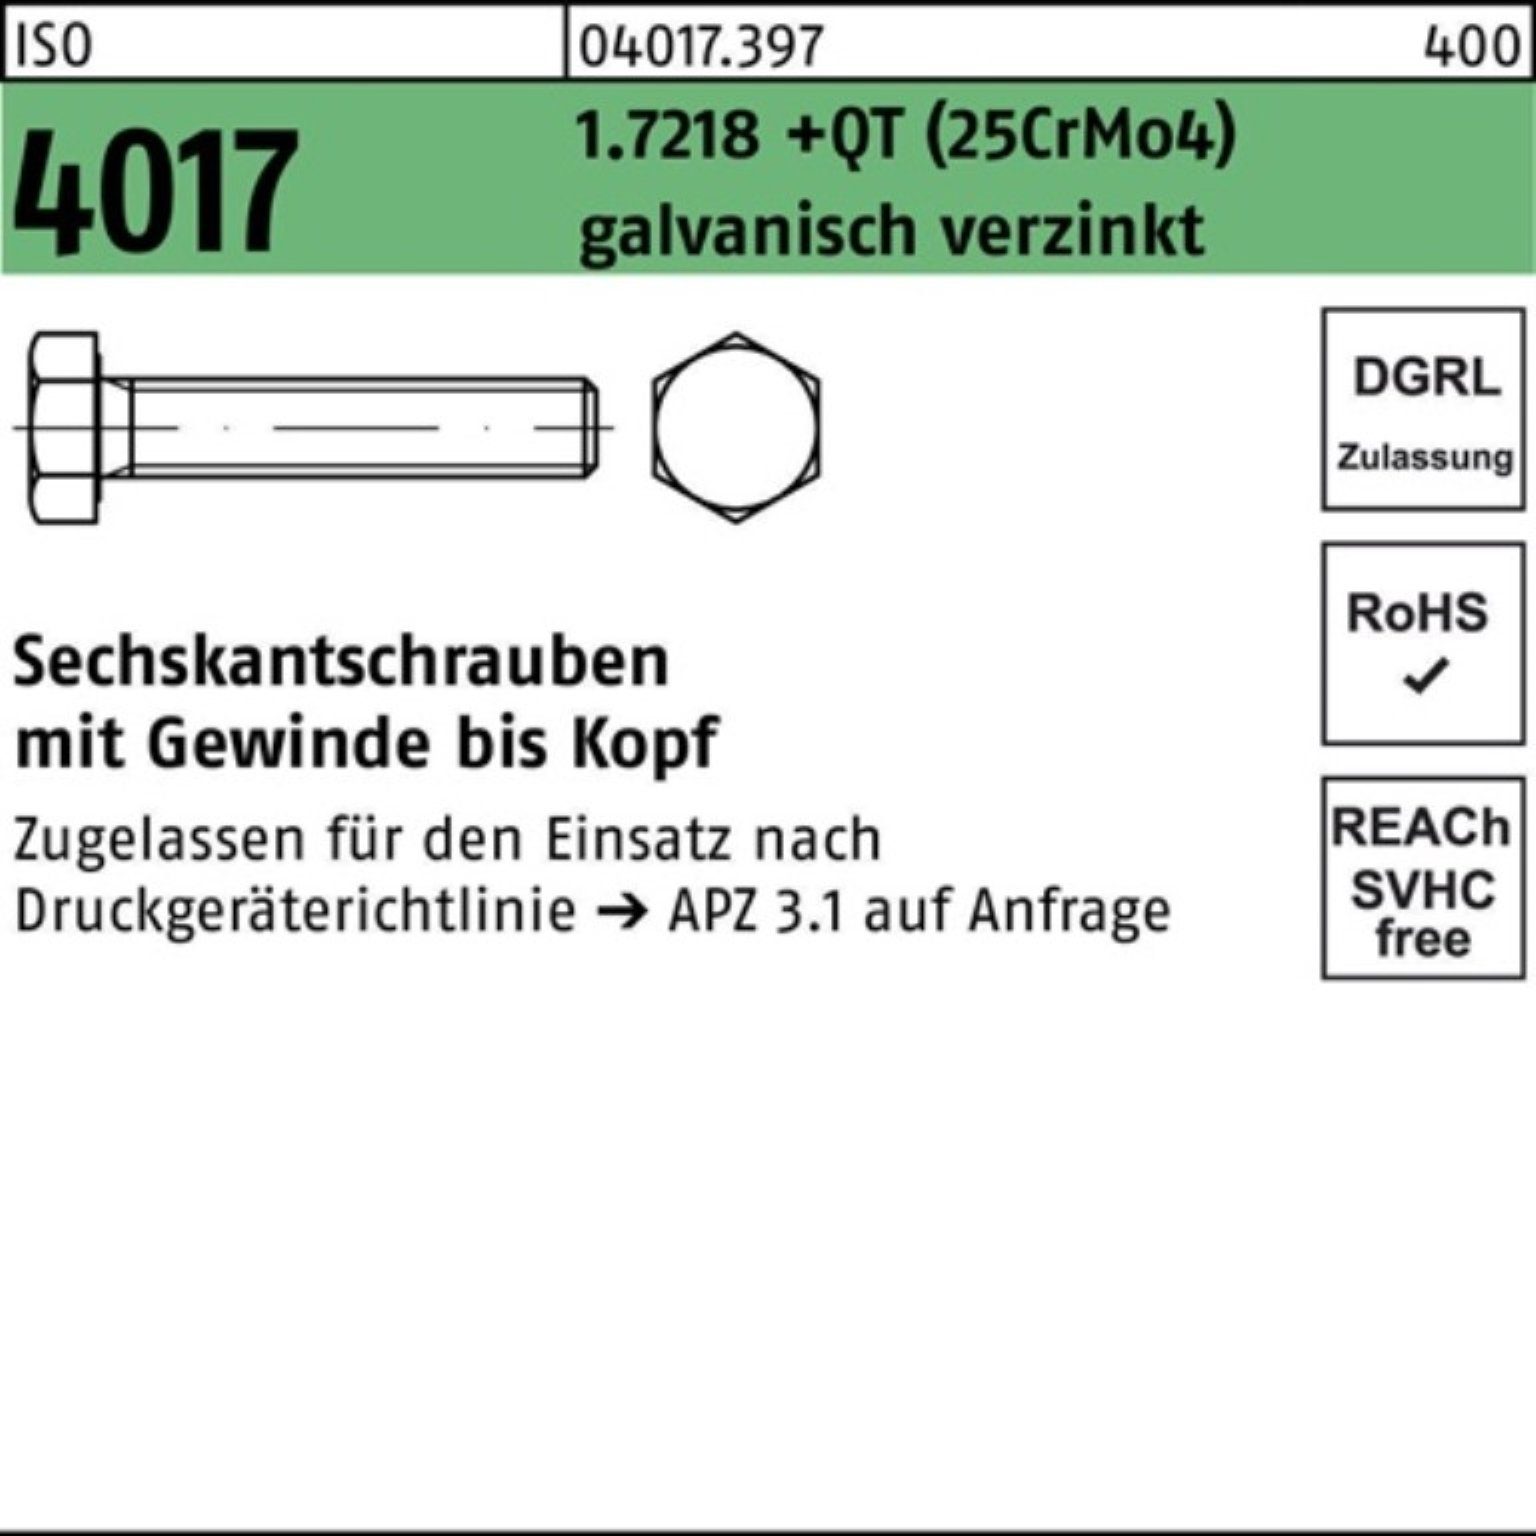 M20x50 g (25CrMo4) 4017 Sechskantschraube ISO Pack Sechskantschraube 100er +QT 1.7218 VG Bufab